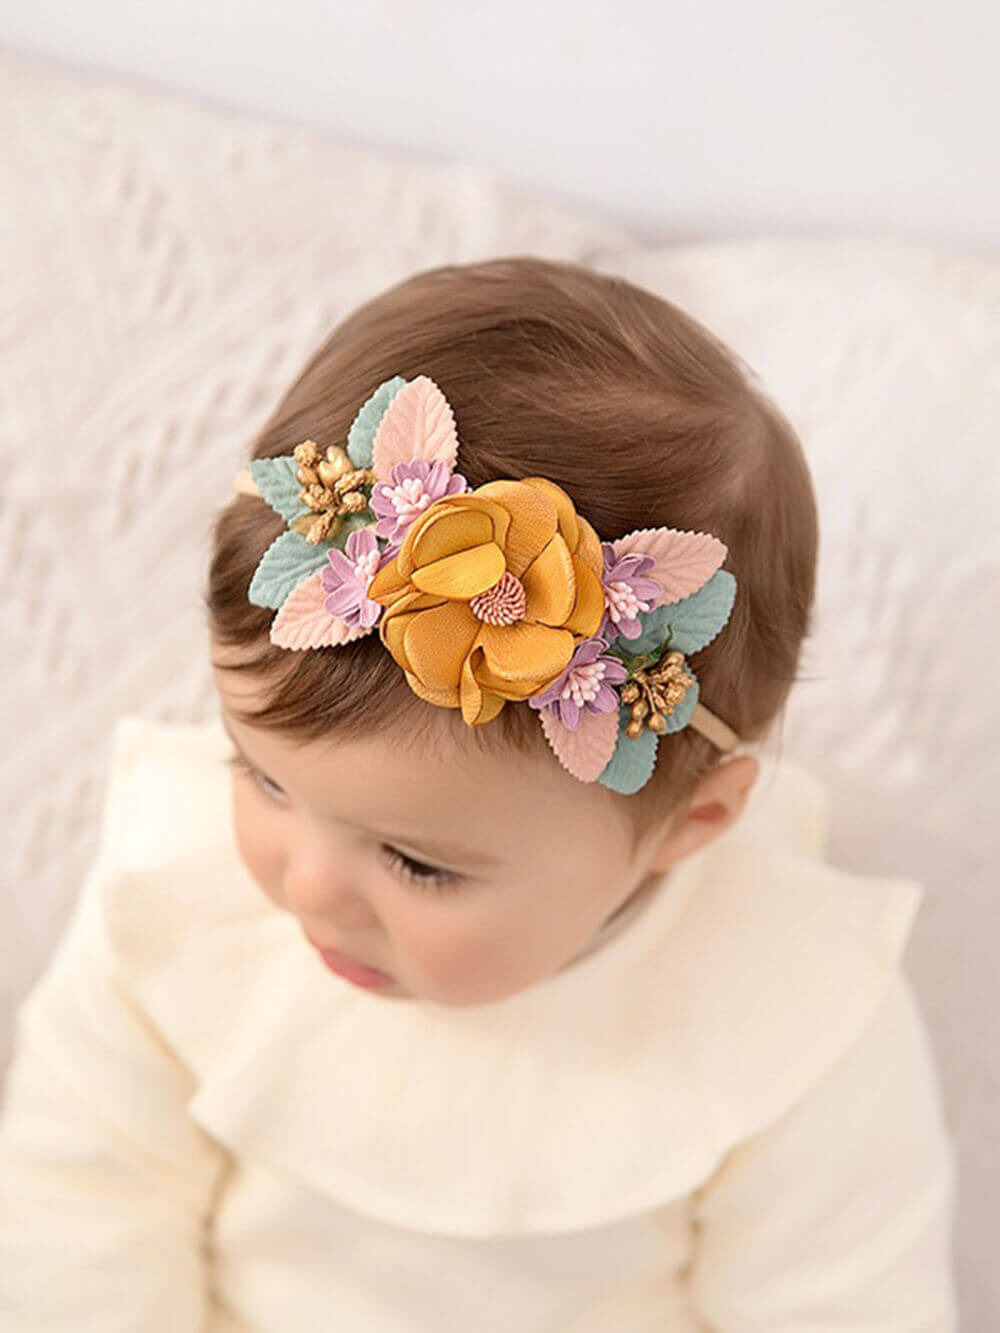 Baby Floral Headband Honey Gold Flowers Κορώνα